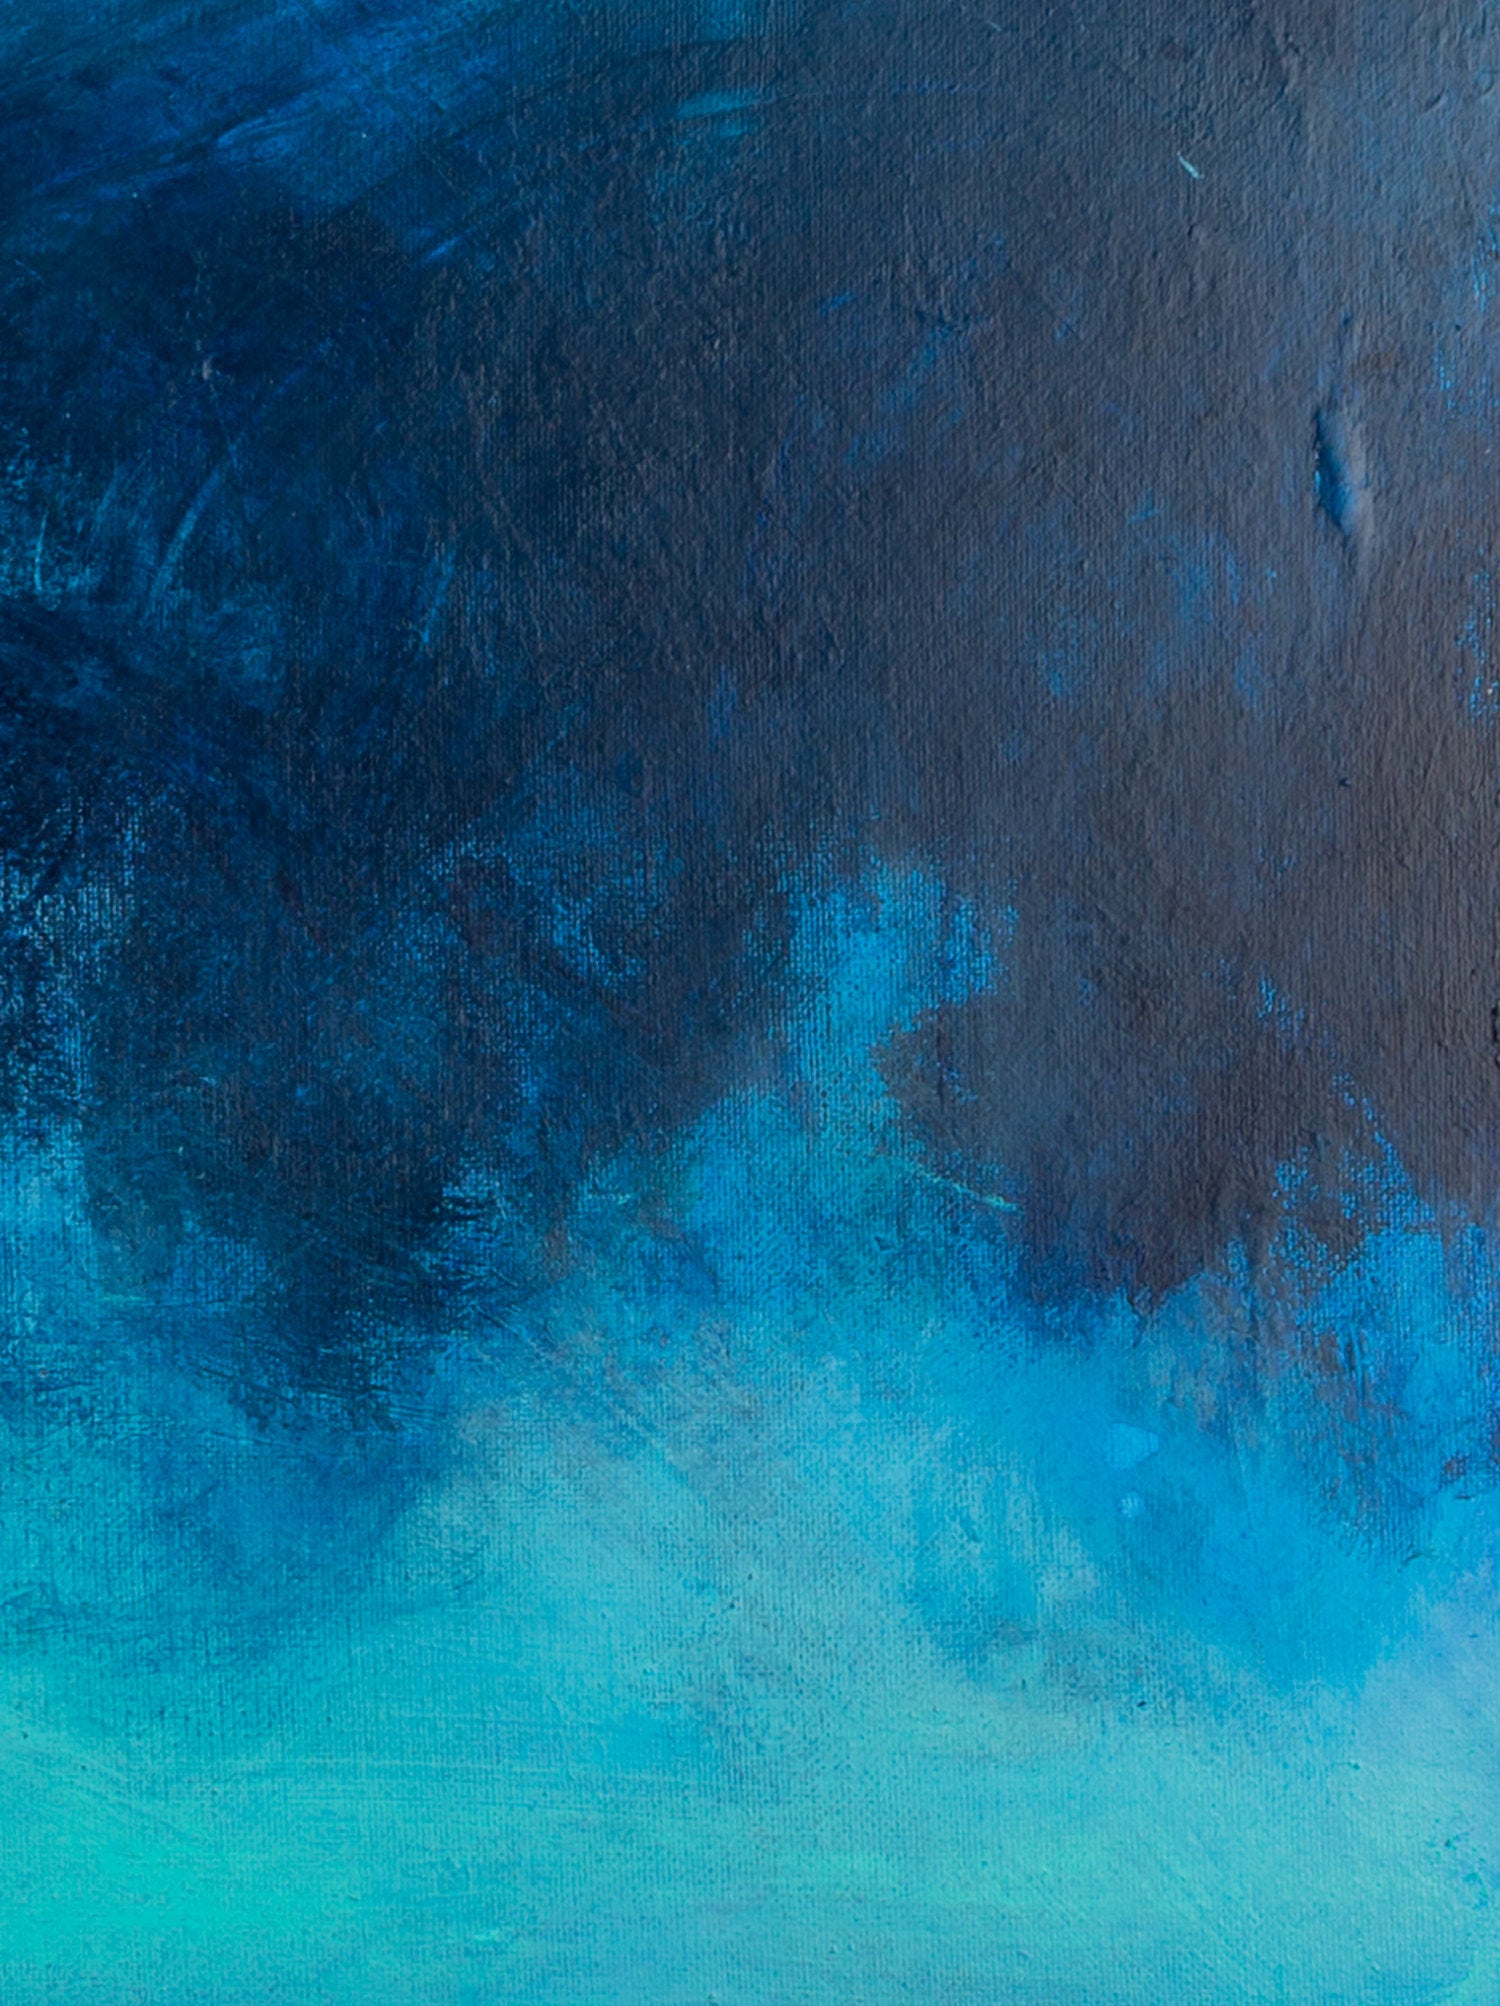 Blue ocean wall art decor, Canvas art abstract painting, Canvas painting, Colorful Abstract Art Acrylic painting by Camilo Mattis - camilomattis.com